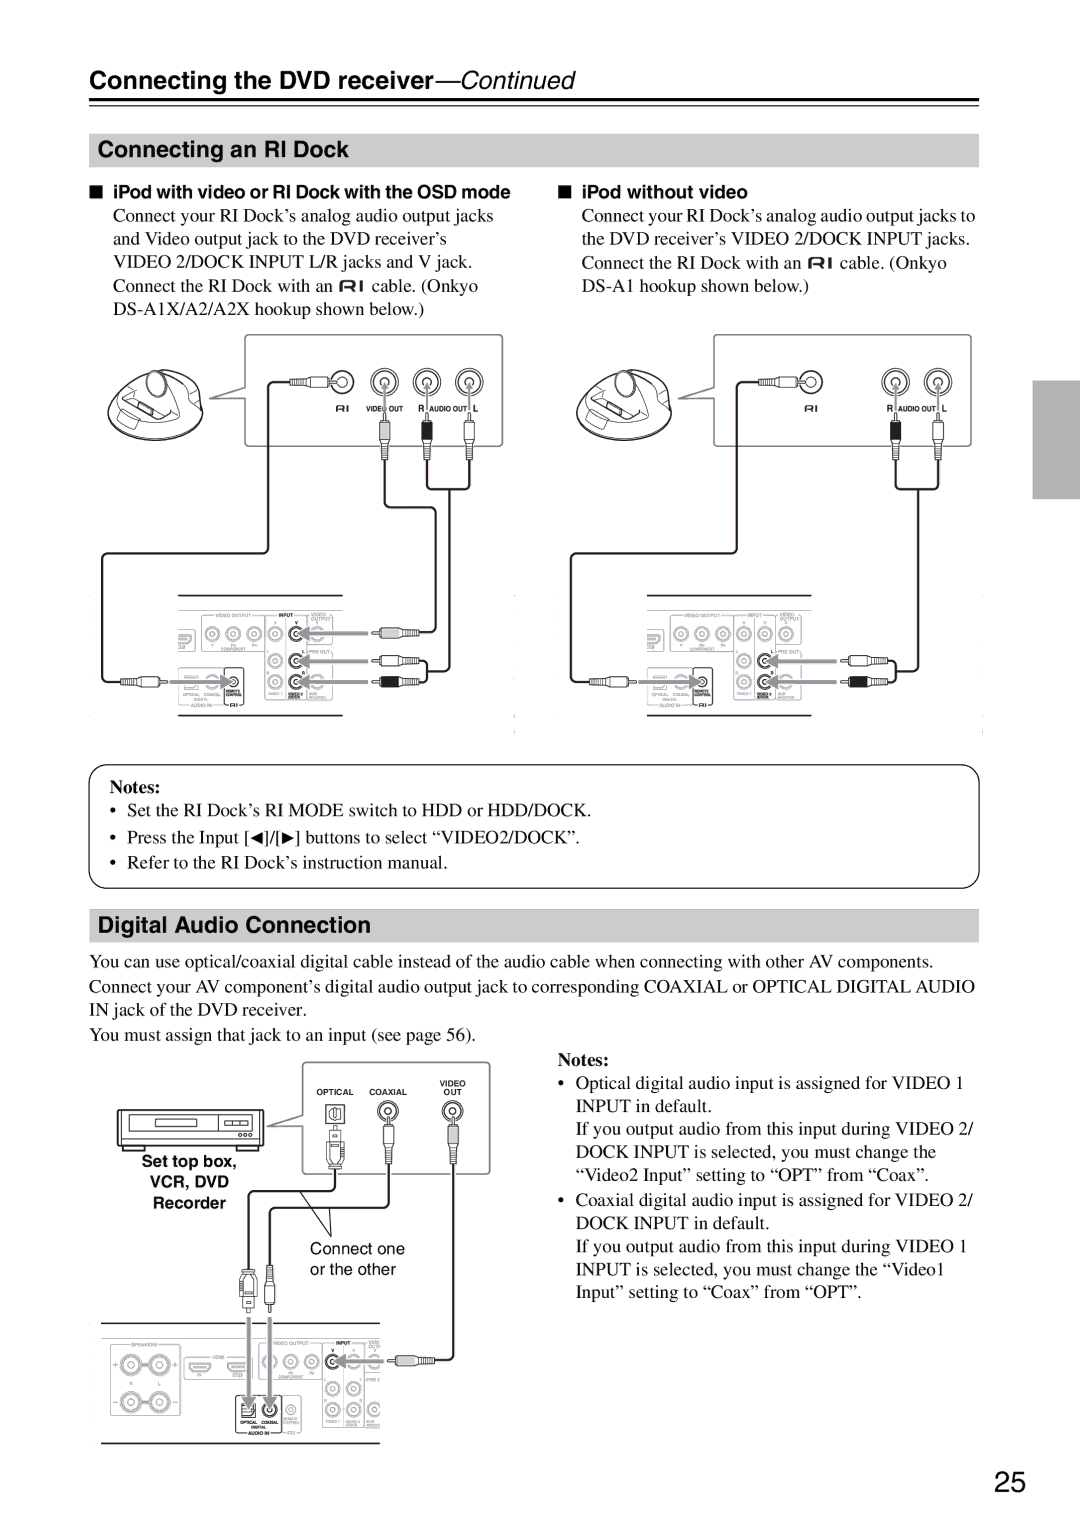 Integra DSR-4.8 instruction manual Connecting an RI Dock, Digital Audio Connection 